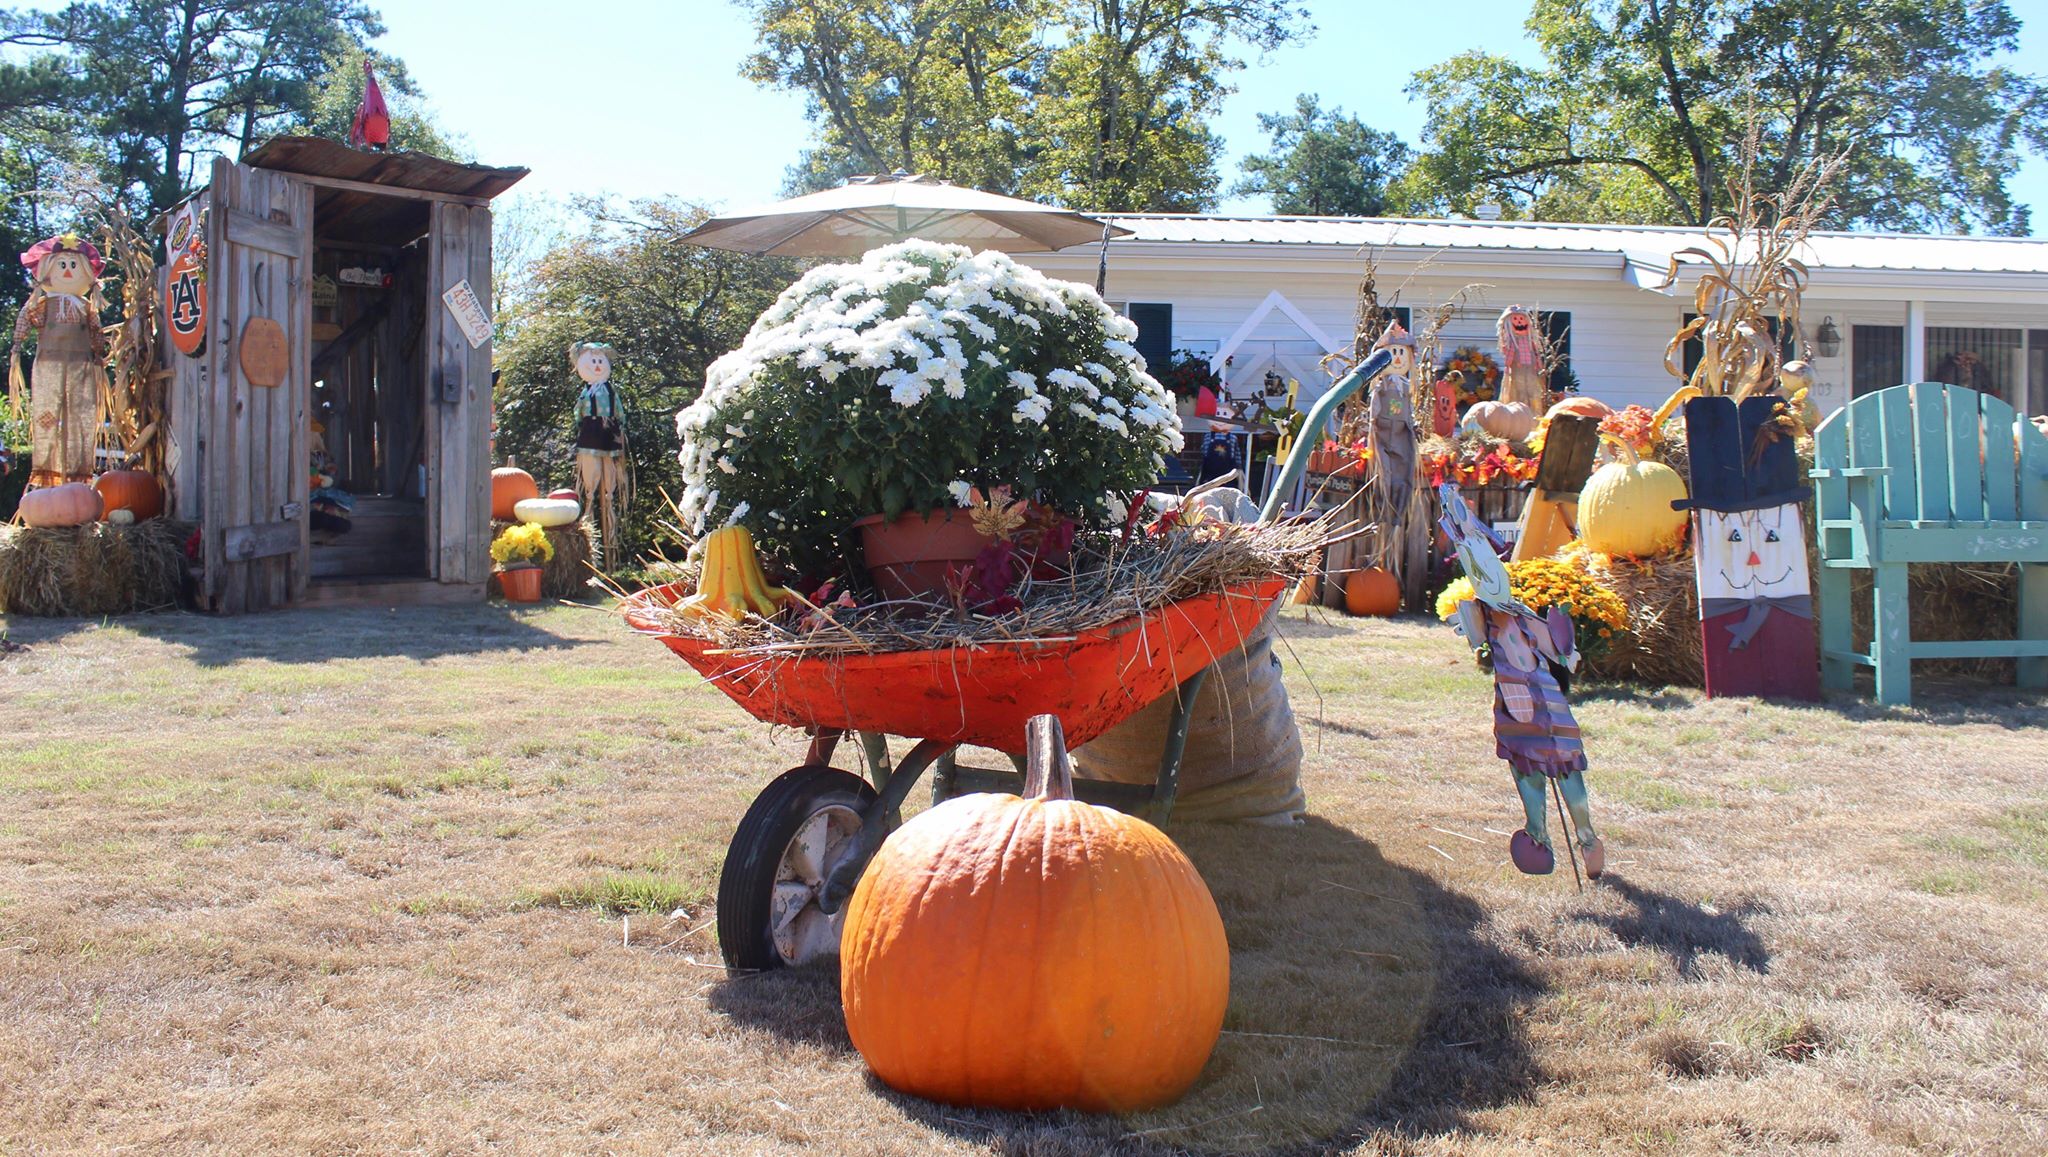 Opelika resident shares joy of fall through large yard display